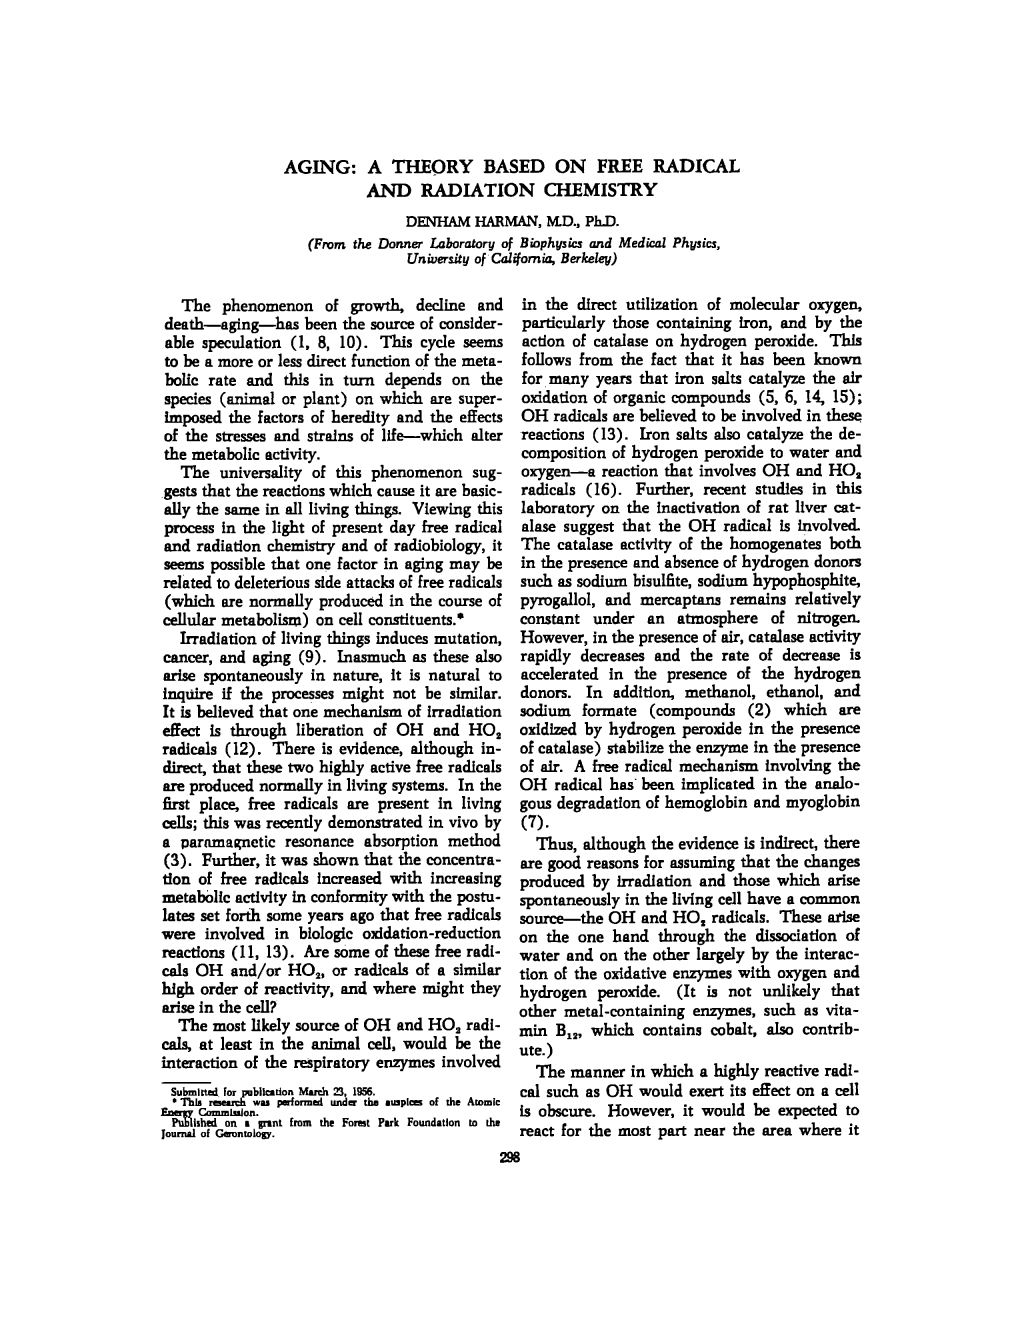 AGING: a THEORY BASED on FREE RADICAL and RADIATION CHEMISTRY DENHAM HARMAN, MD ., Ph .D